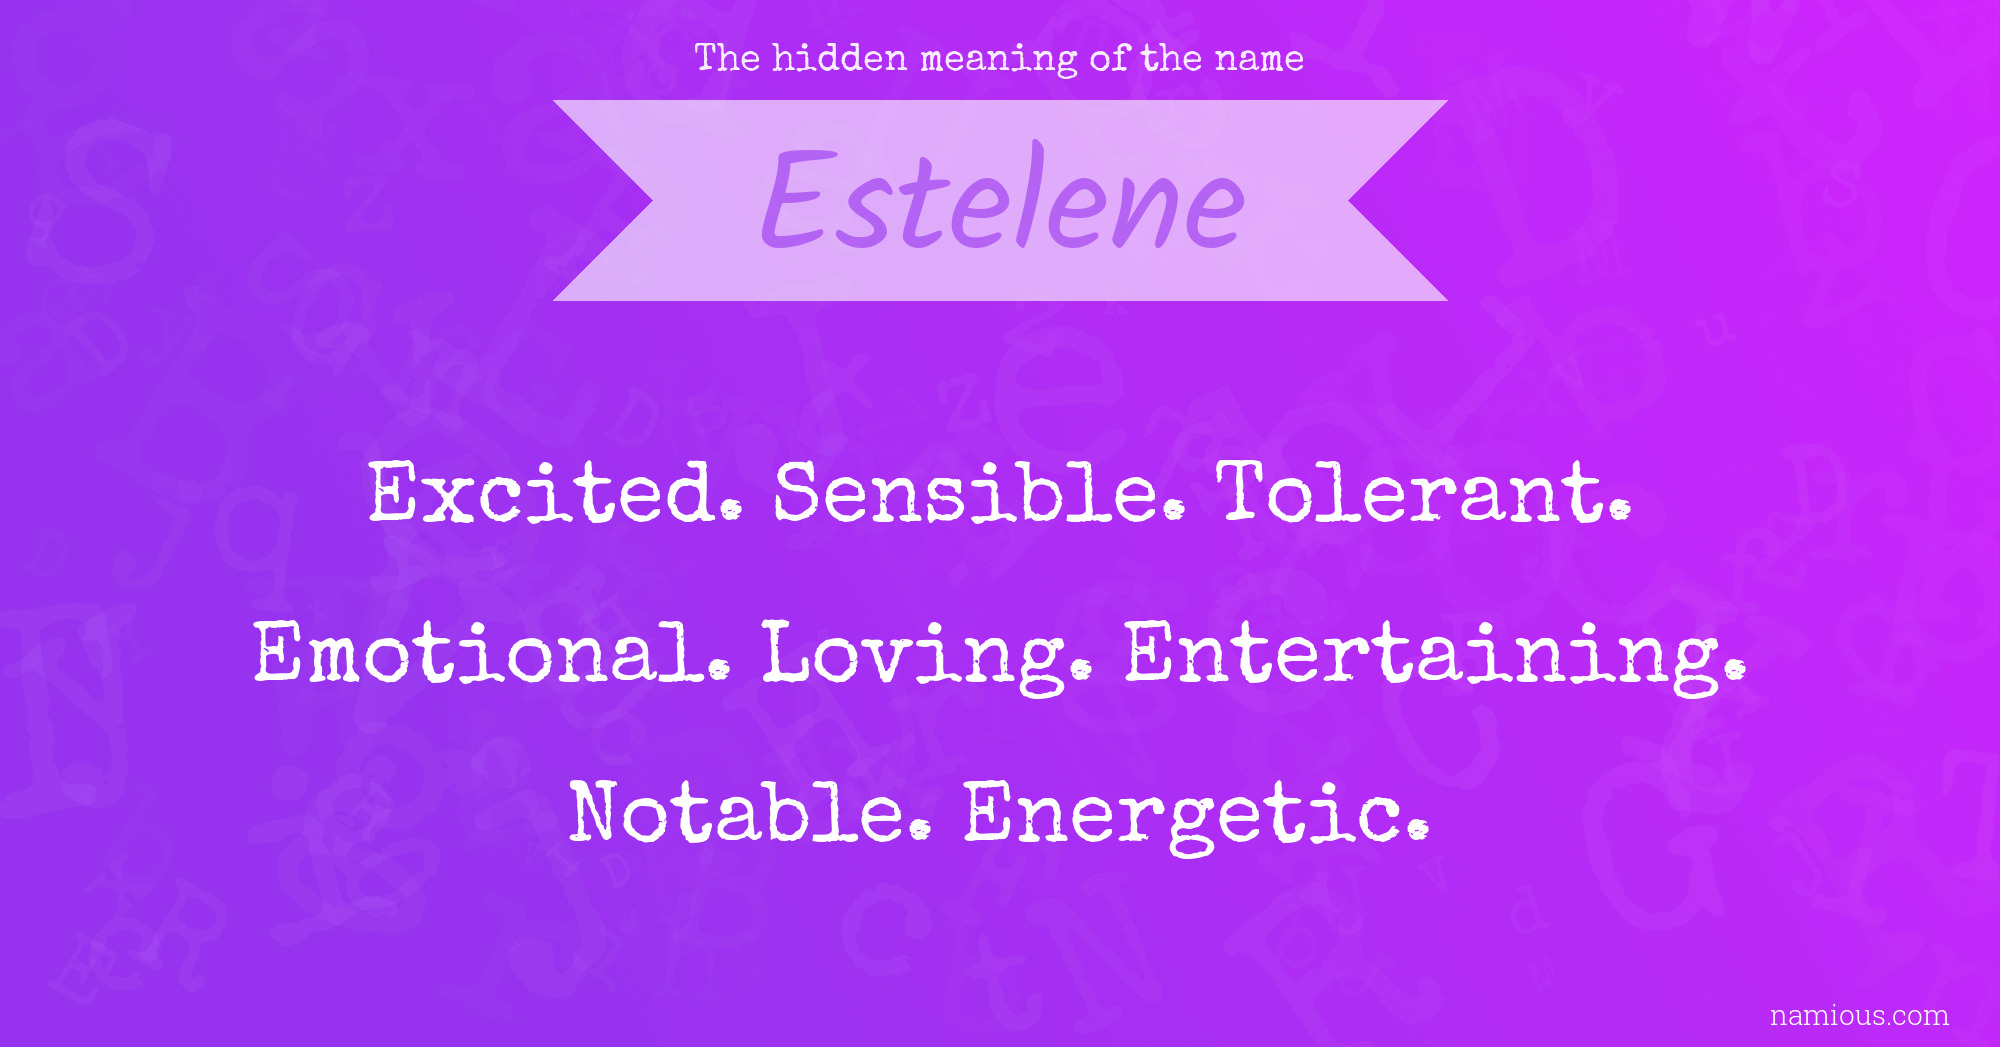 The hidden meaning of the name Estelene